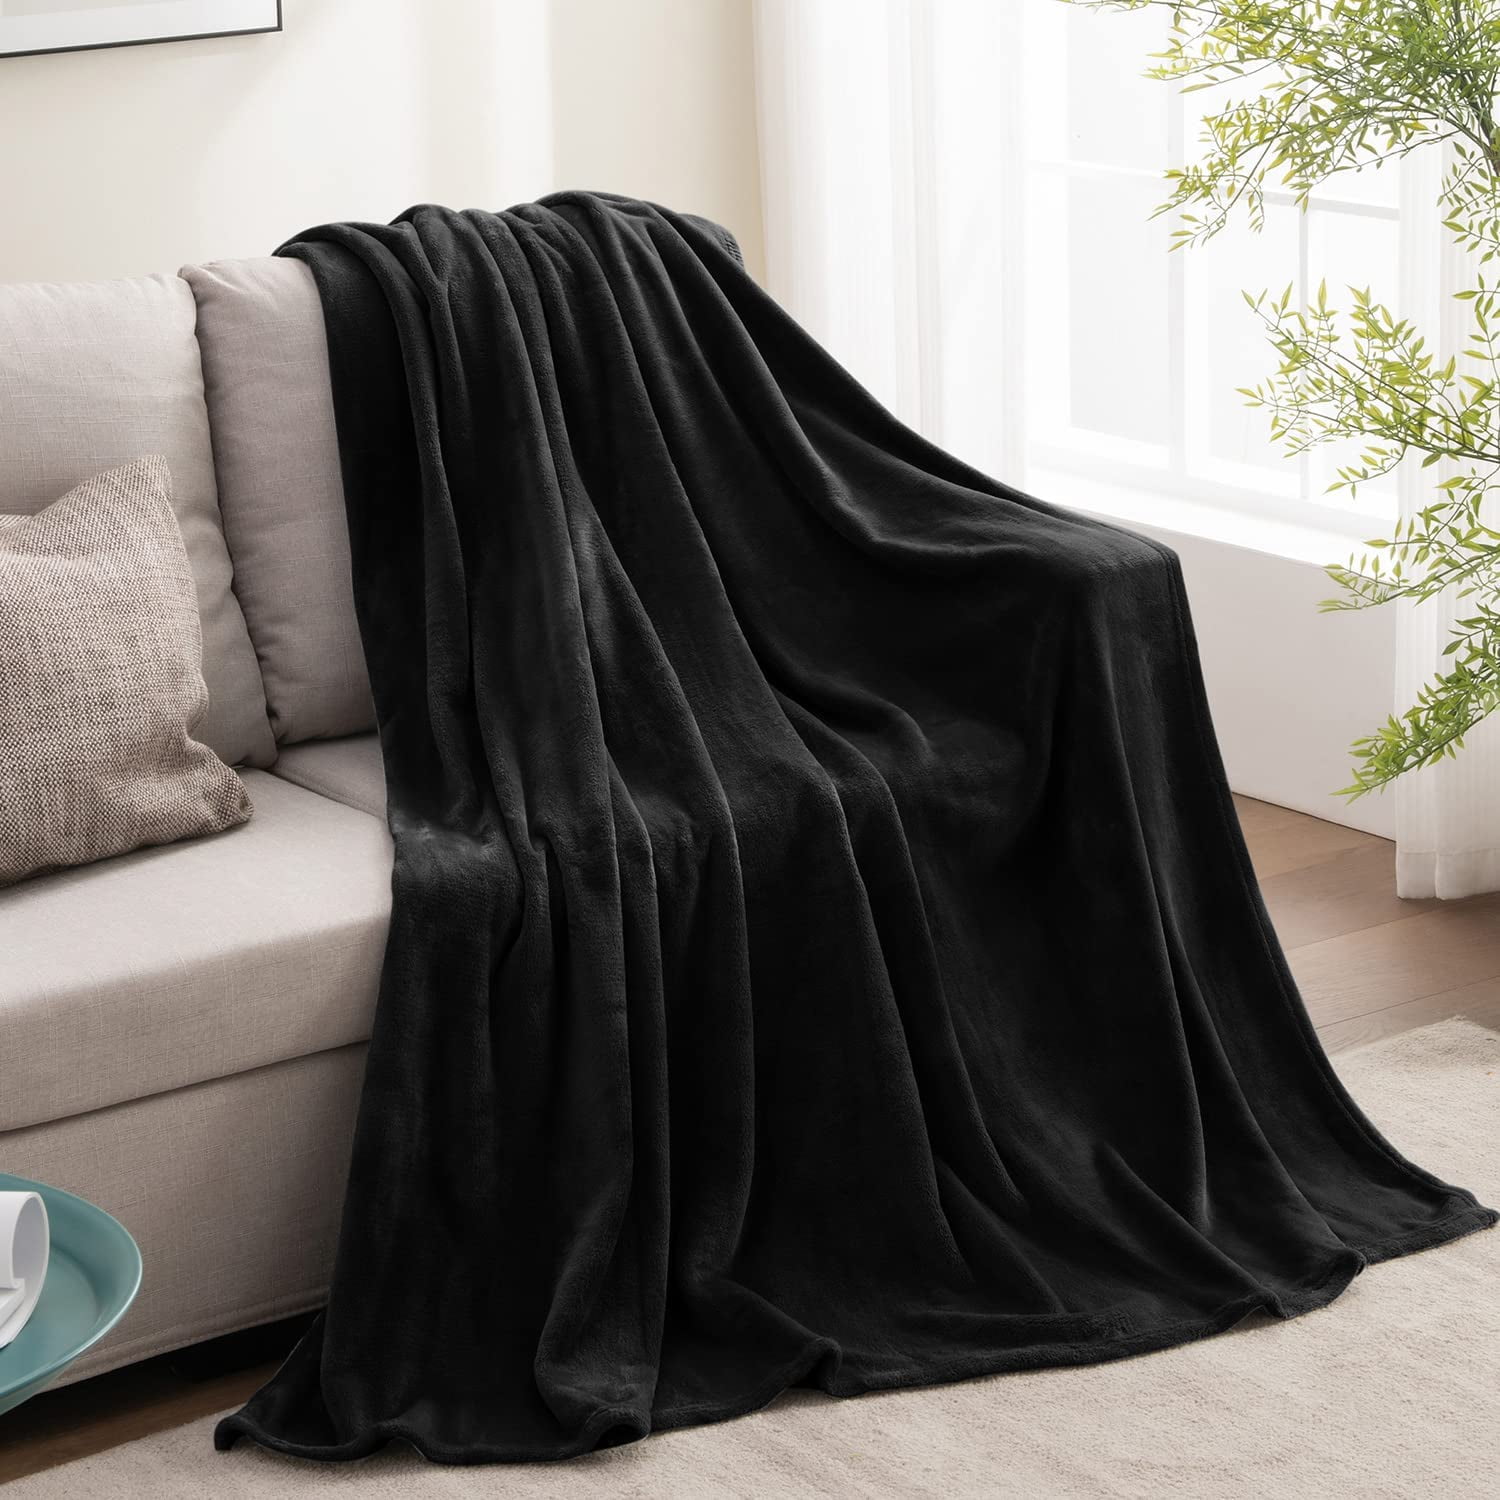 Throw Blanket Snuggle Plush Soft Fleece Winter Warm Comfy Sofa Chair Blanket US 